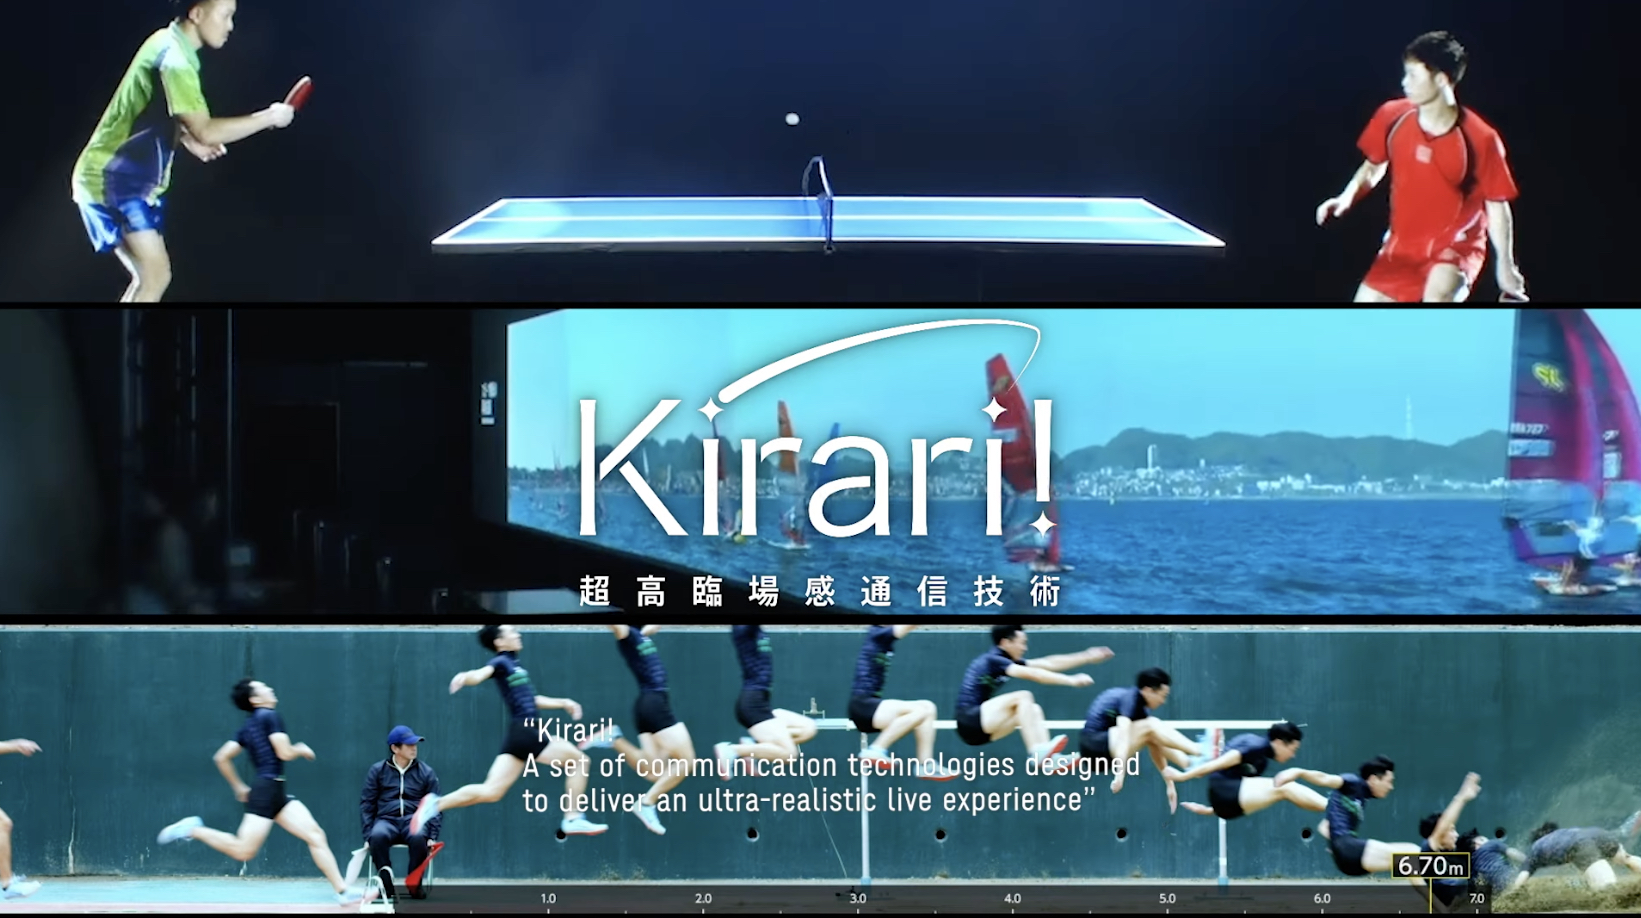 NTT’s Kirari system in action